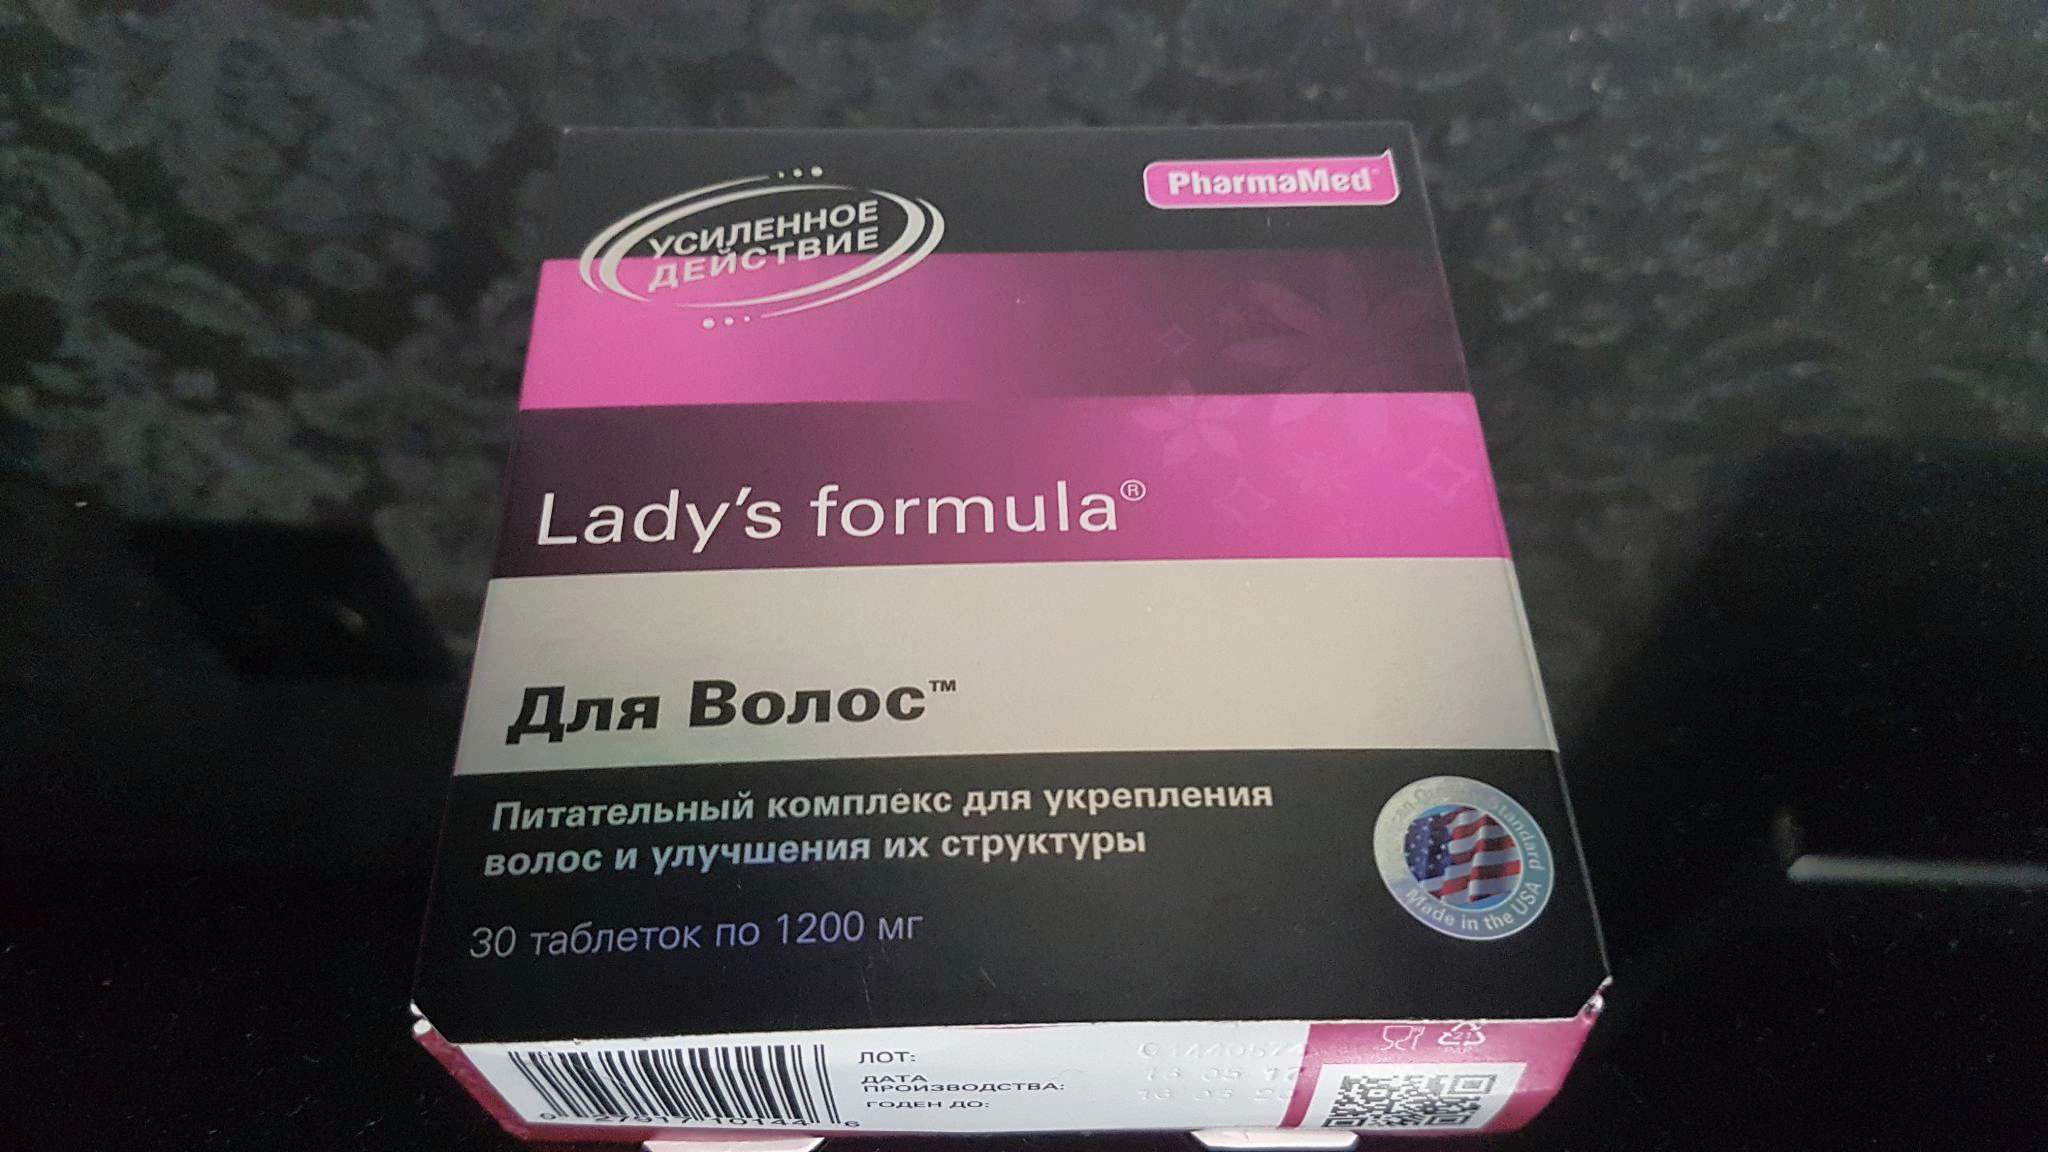 Lady s formula 30. Ladys Formula для волос, табл. №30. Ледис формула 45+. Lady's Formula таблетки. Lady's Formula нестареющая кожа капсулы.